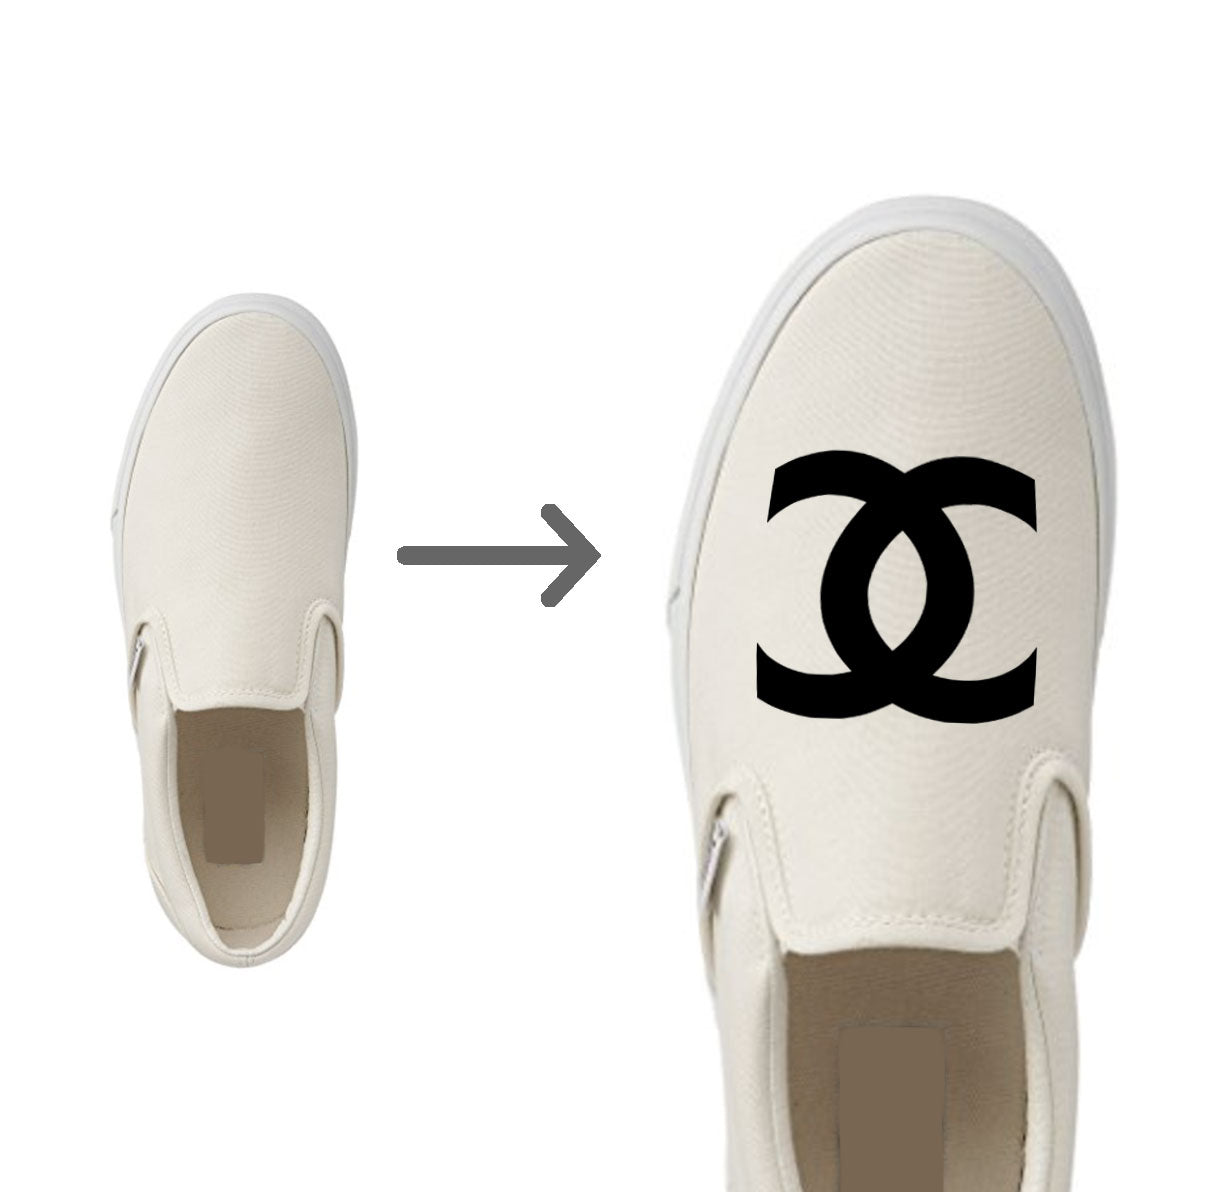 Chanel Brand Logo Iron-on Decal (heat transfer) – Customeazy